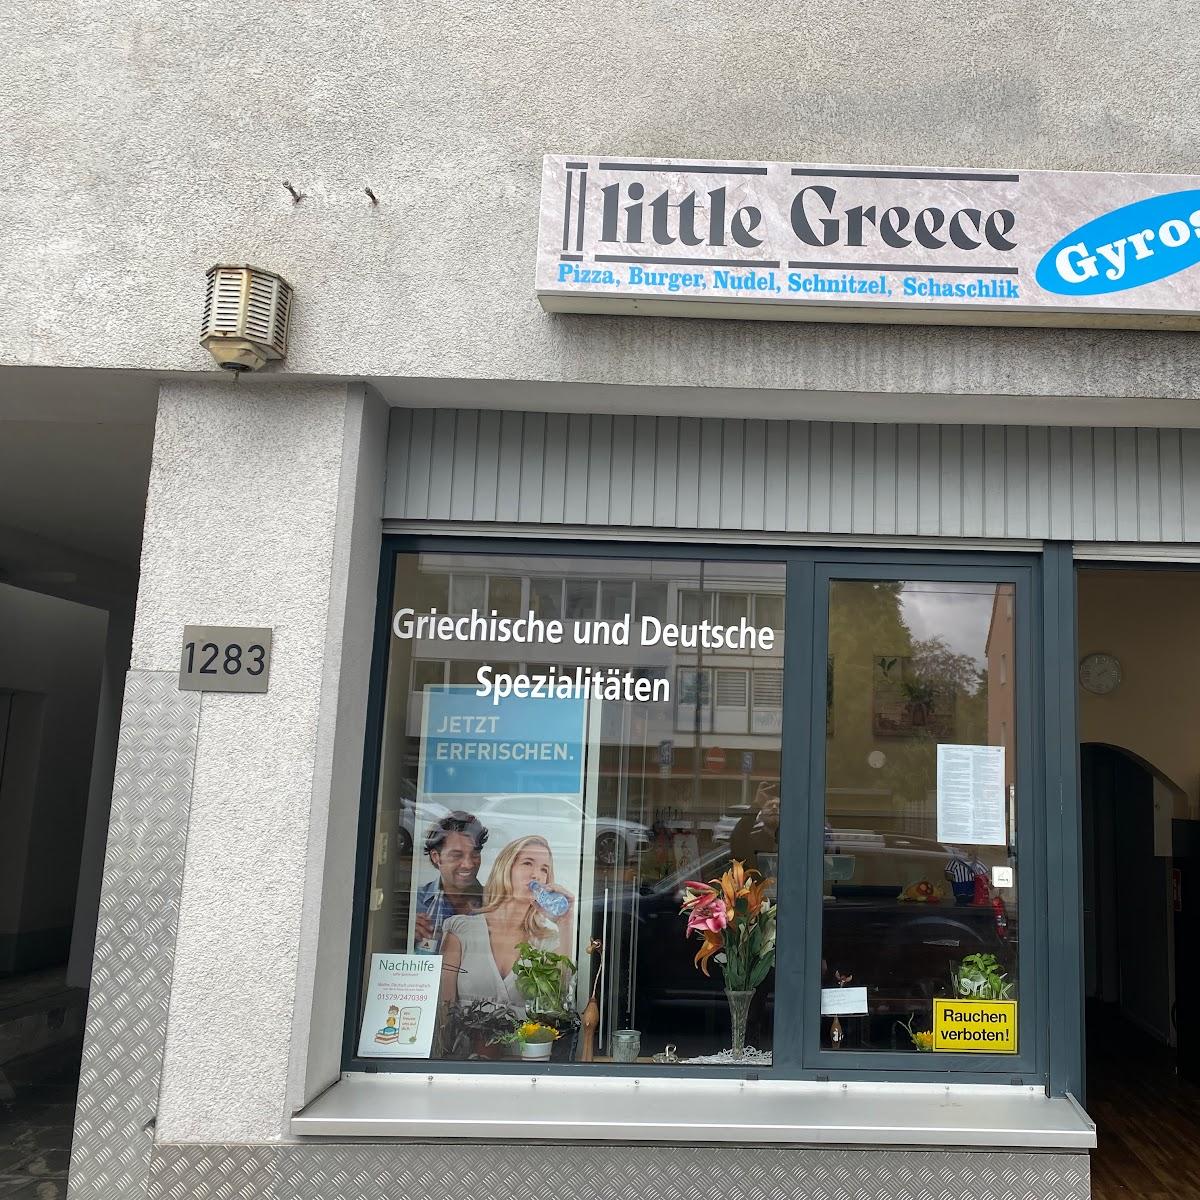 Restaurant "Little Greece" in Köln